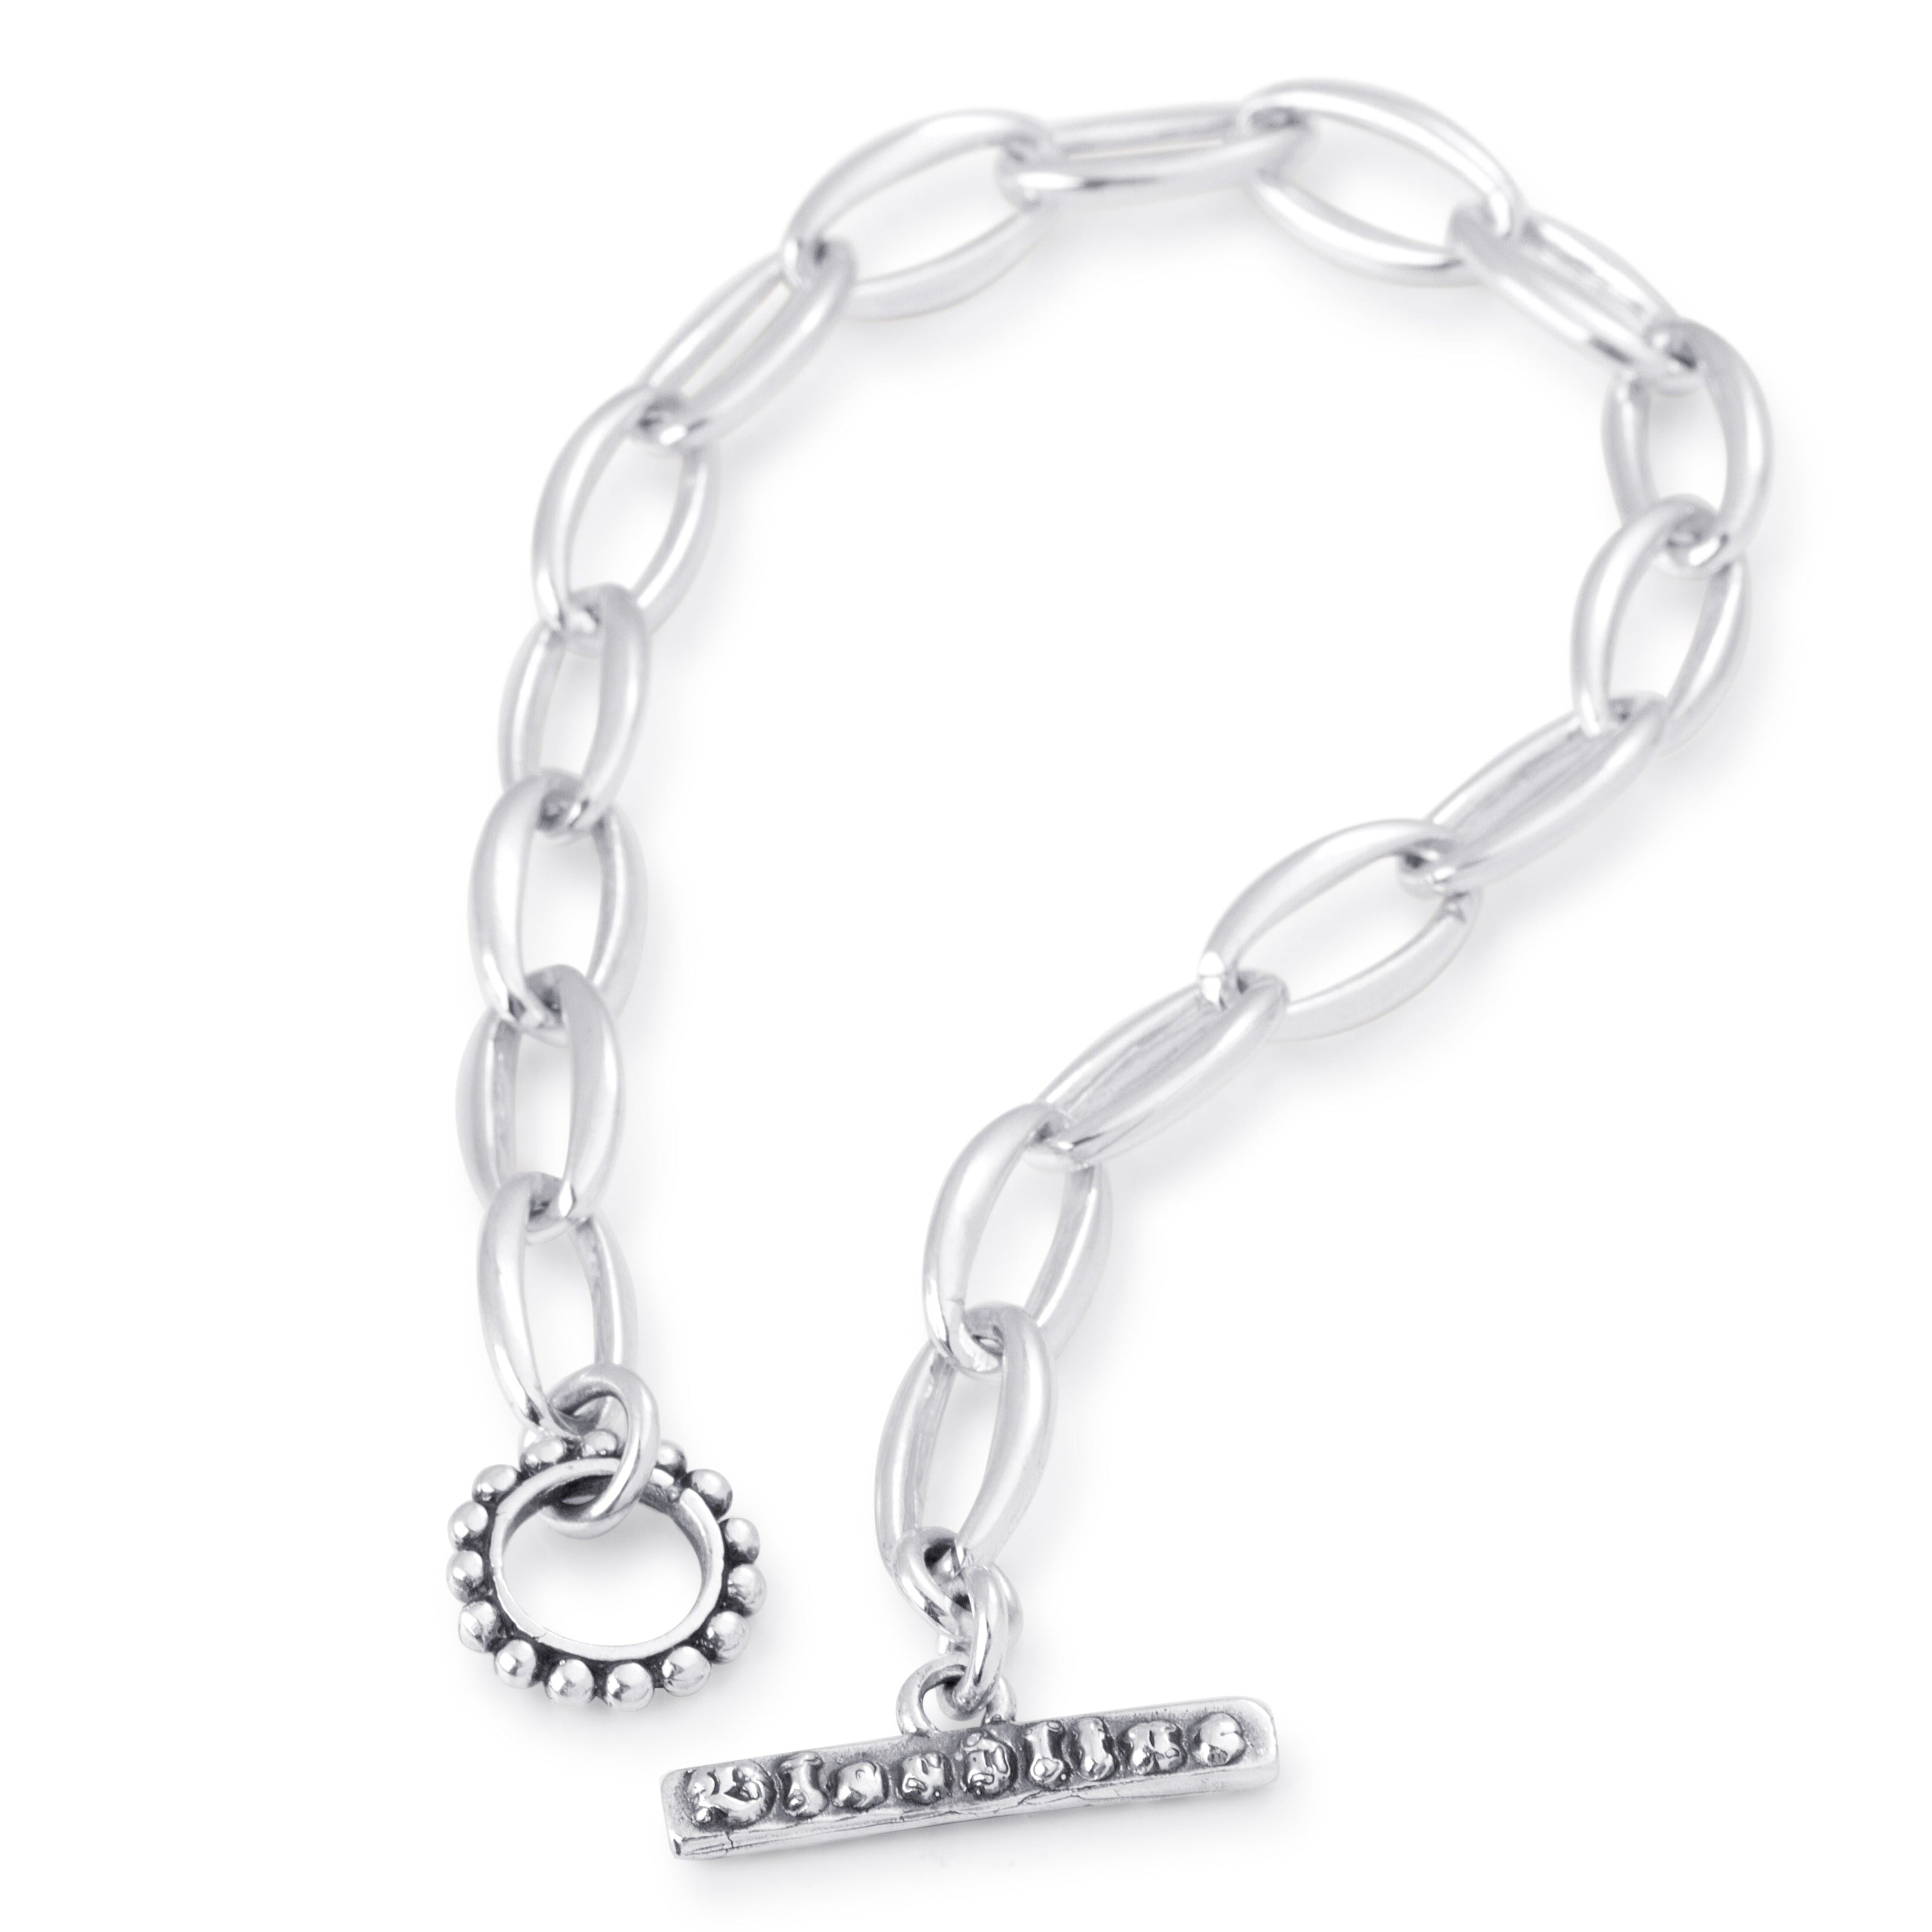 Manhattan Link Chain Bracelet in Sterling Silver, 8.5mm